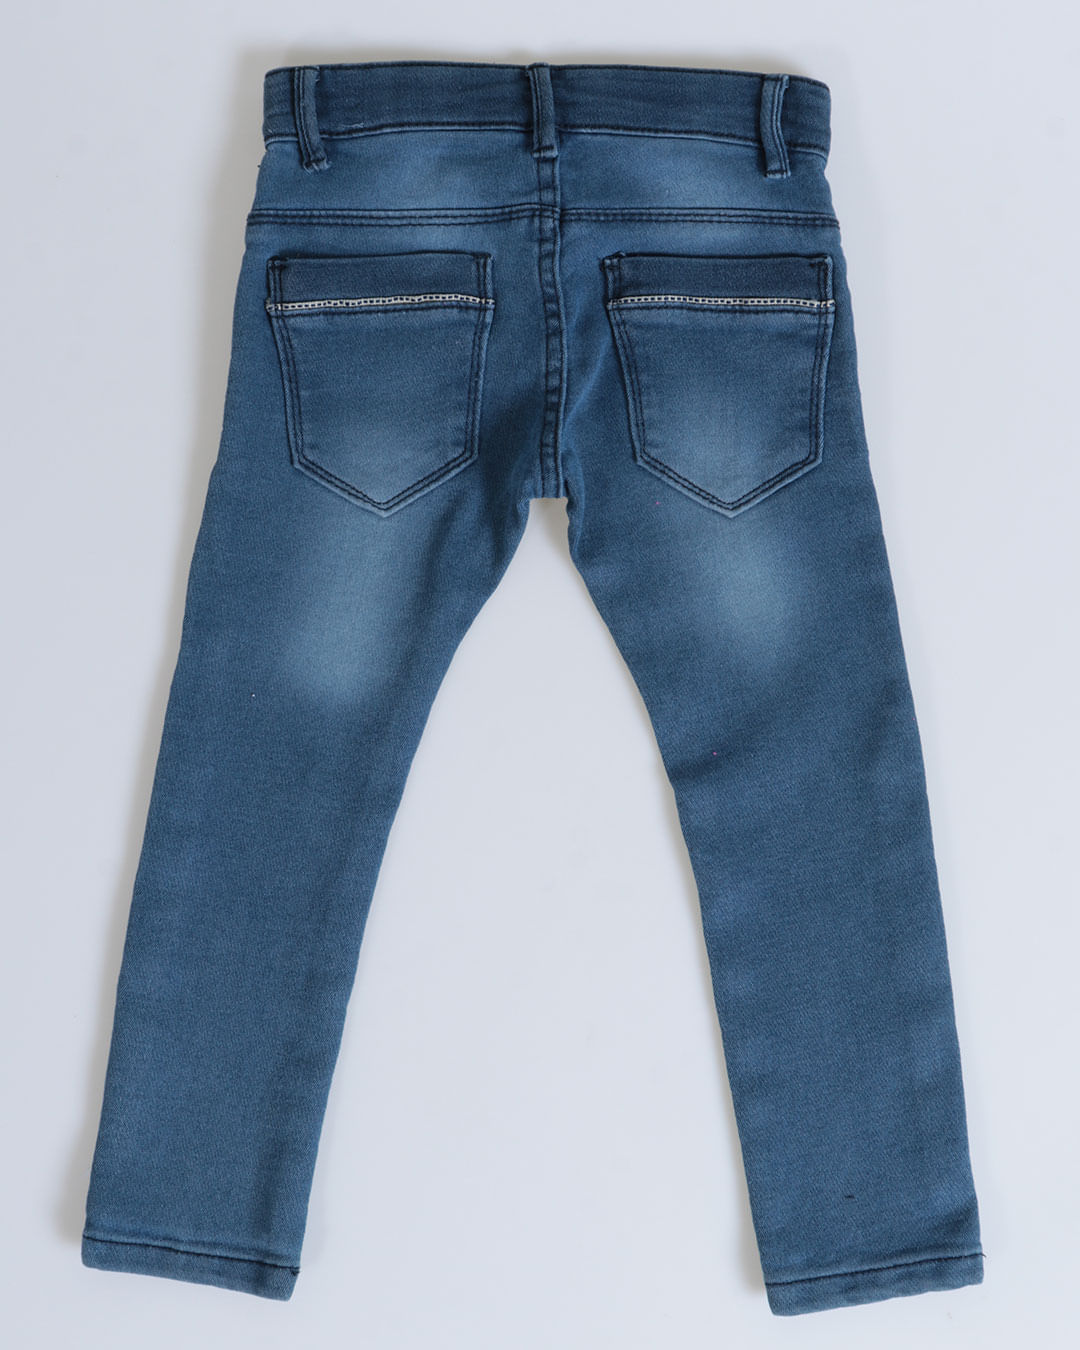 39521000077045-blue-jeans-medio-2